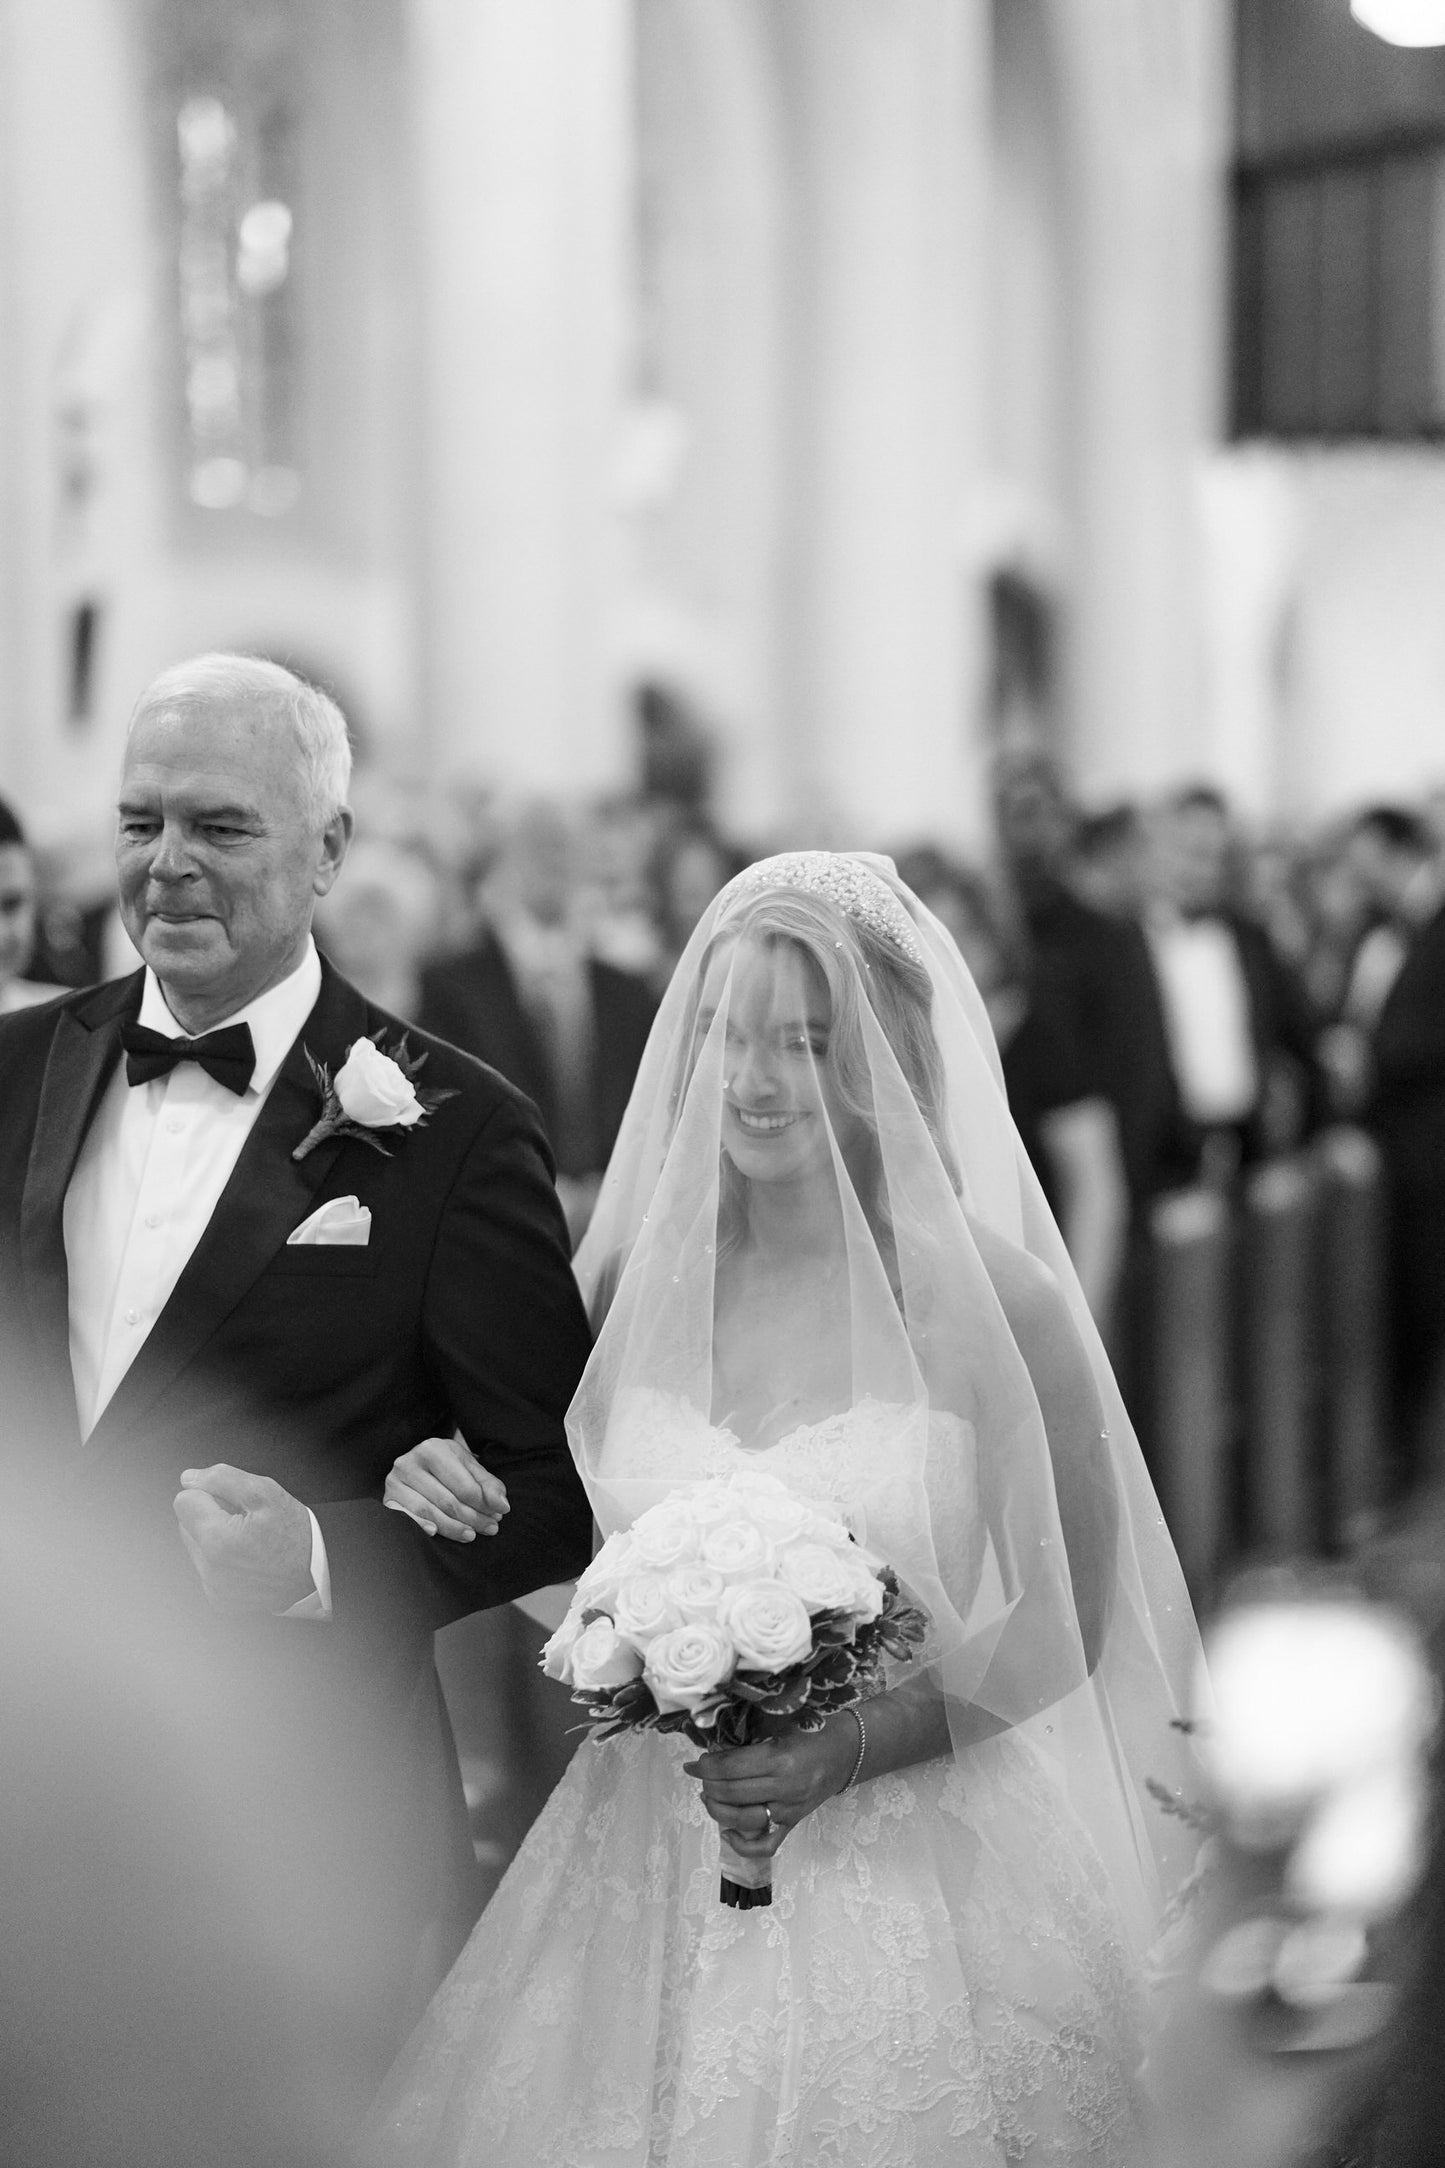 dew drop rhinestone blusher wedding veil over face as dad walks her down the aisle